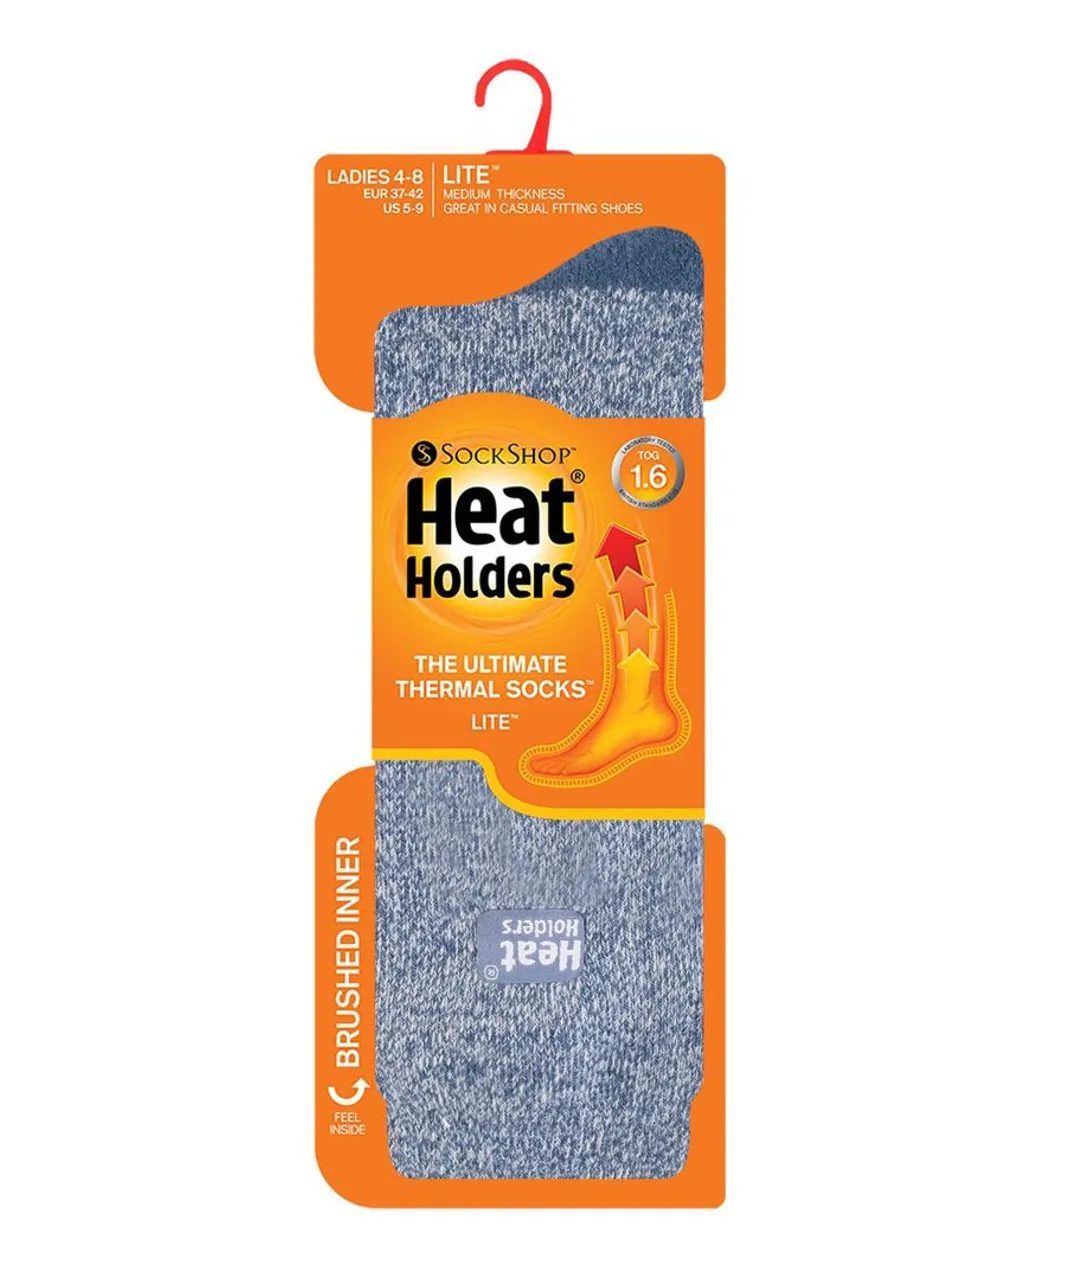 Heat Holders Lite - 3 Pair Multipack Womens Thermal Socks for Winter